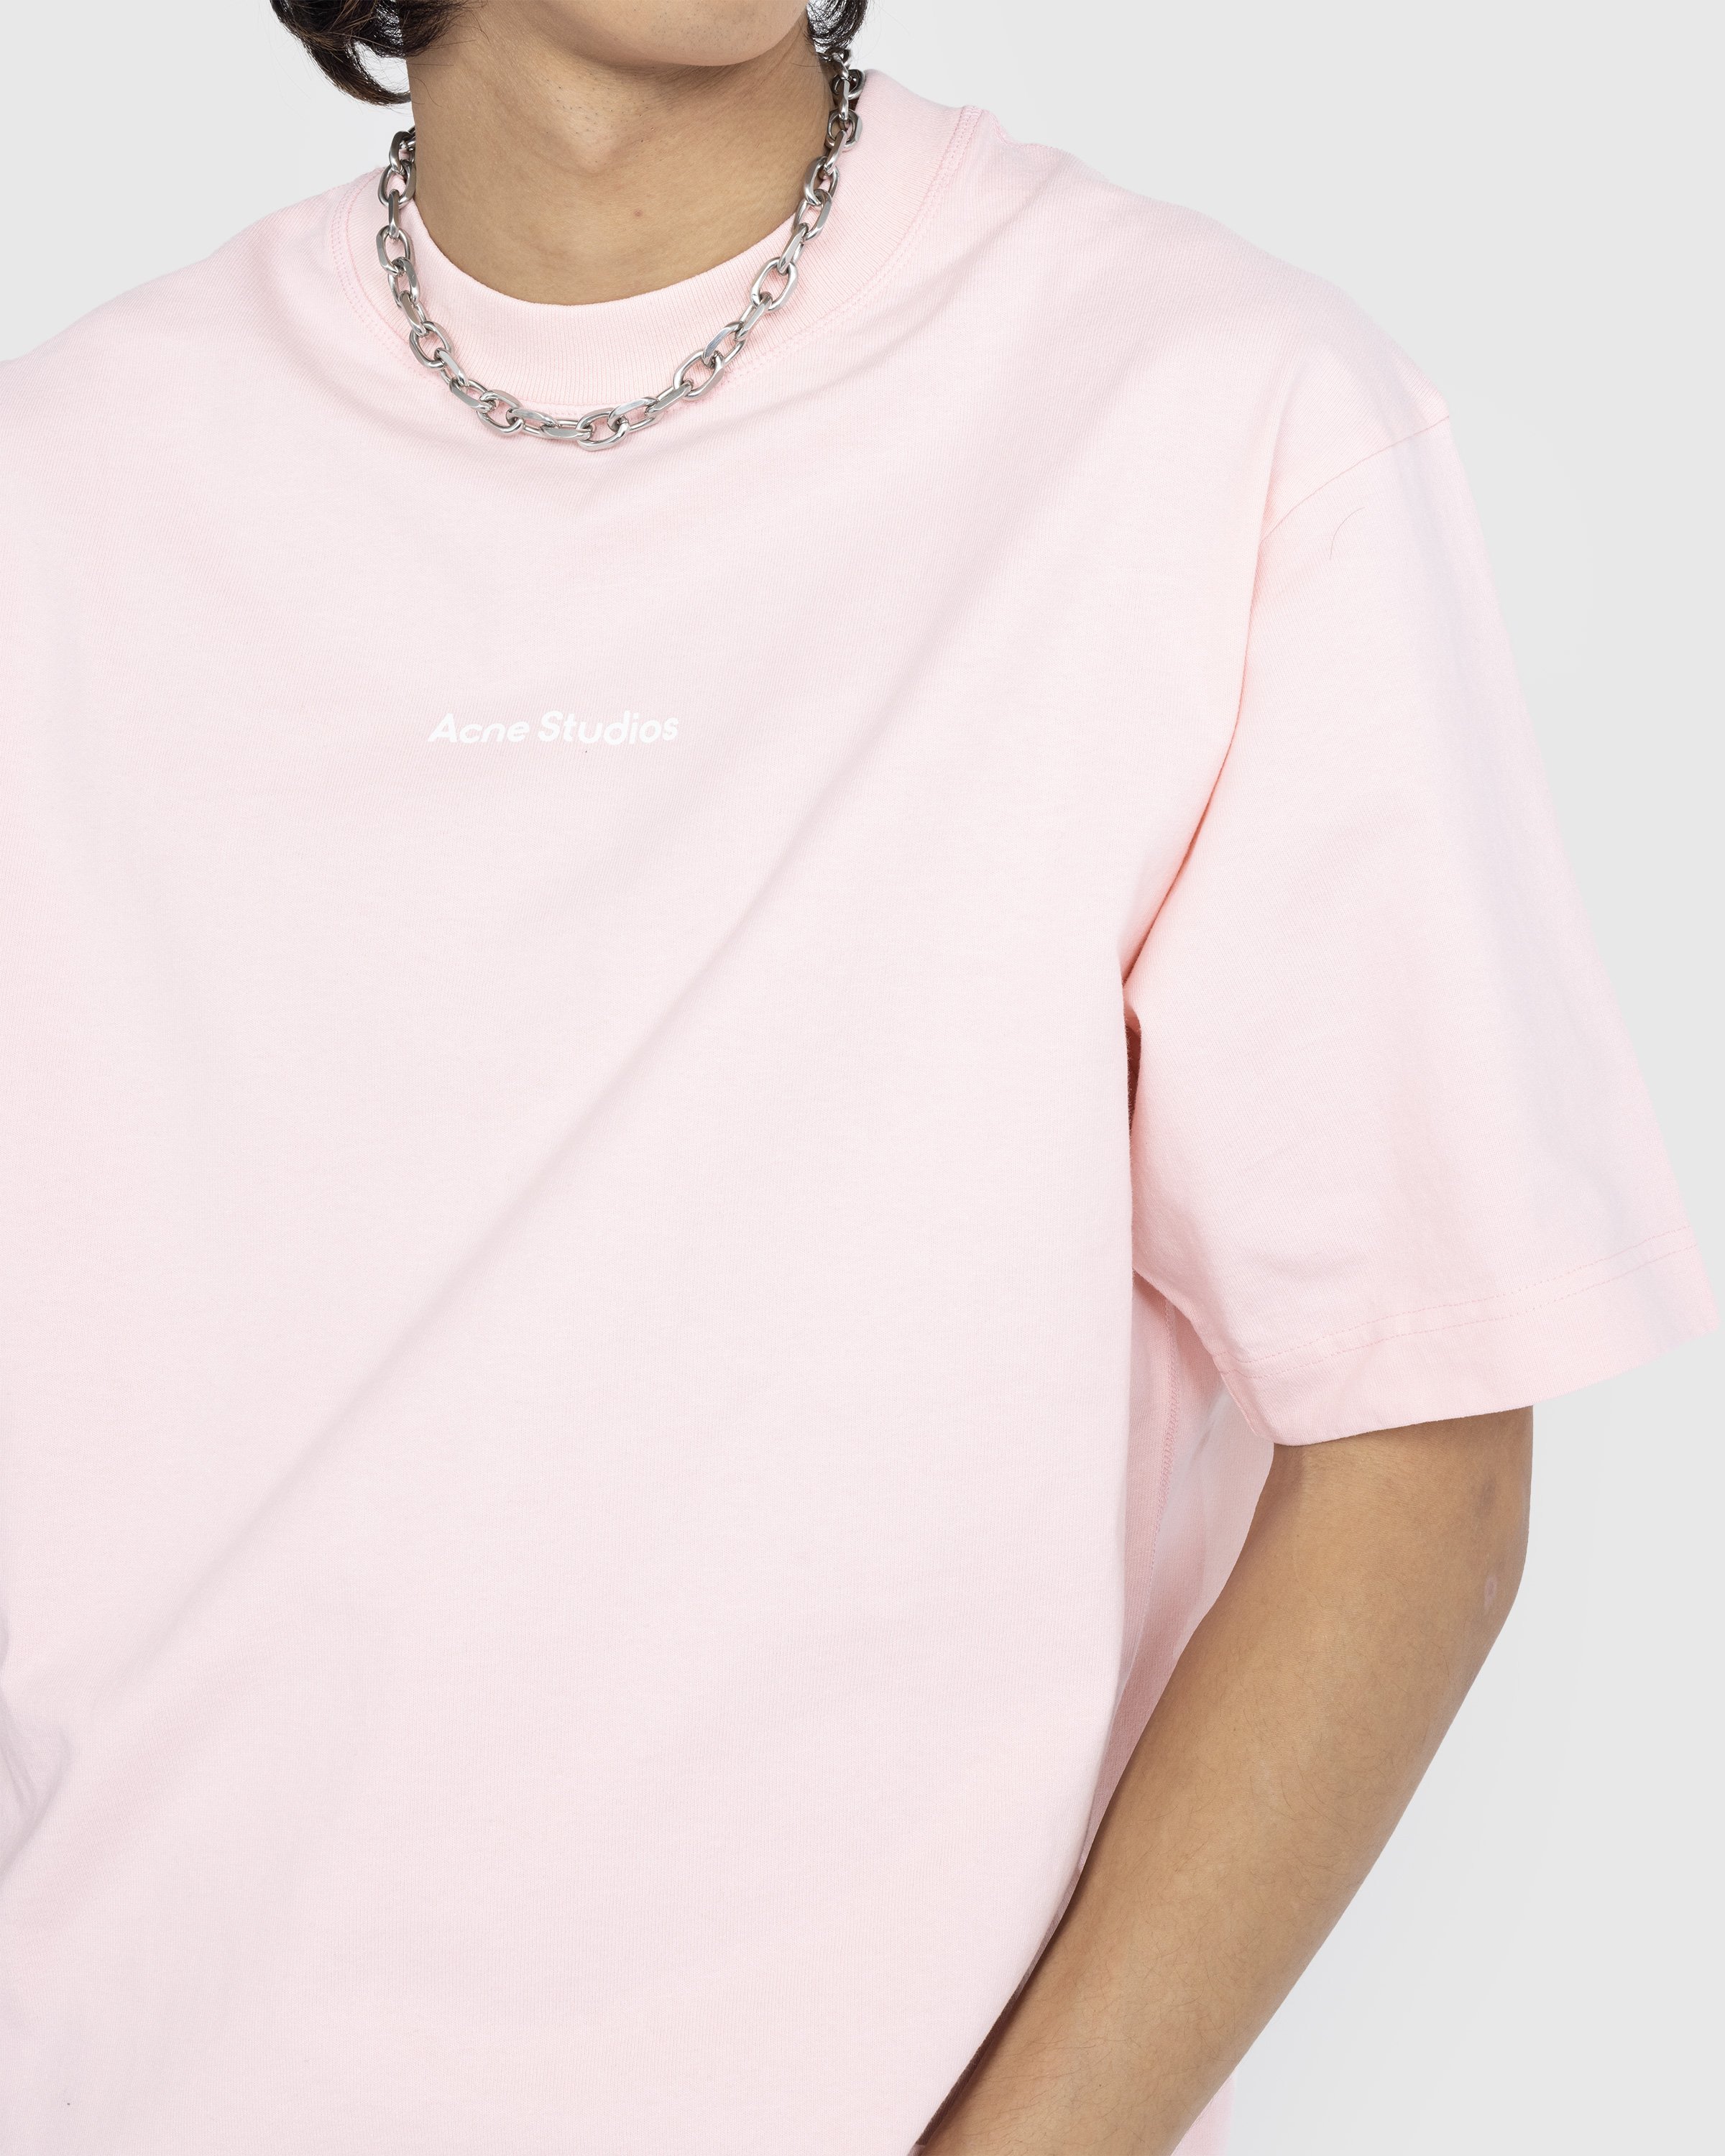 Acne Studios - Logo T-Shirt Pale Pink - Clothing - Pink - Image 5